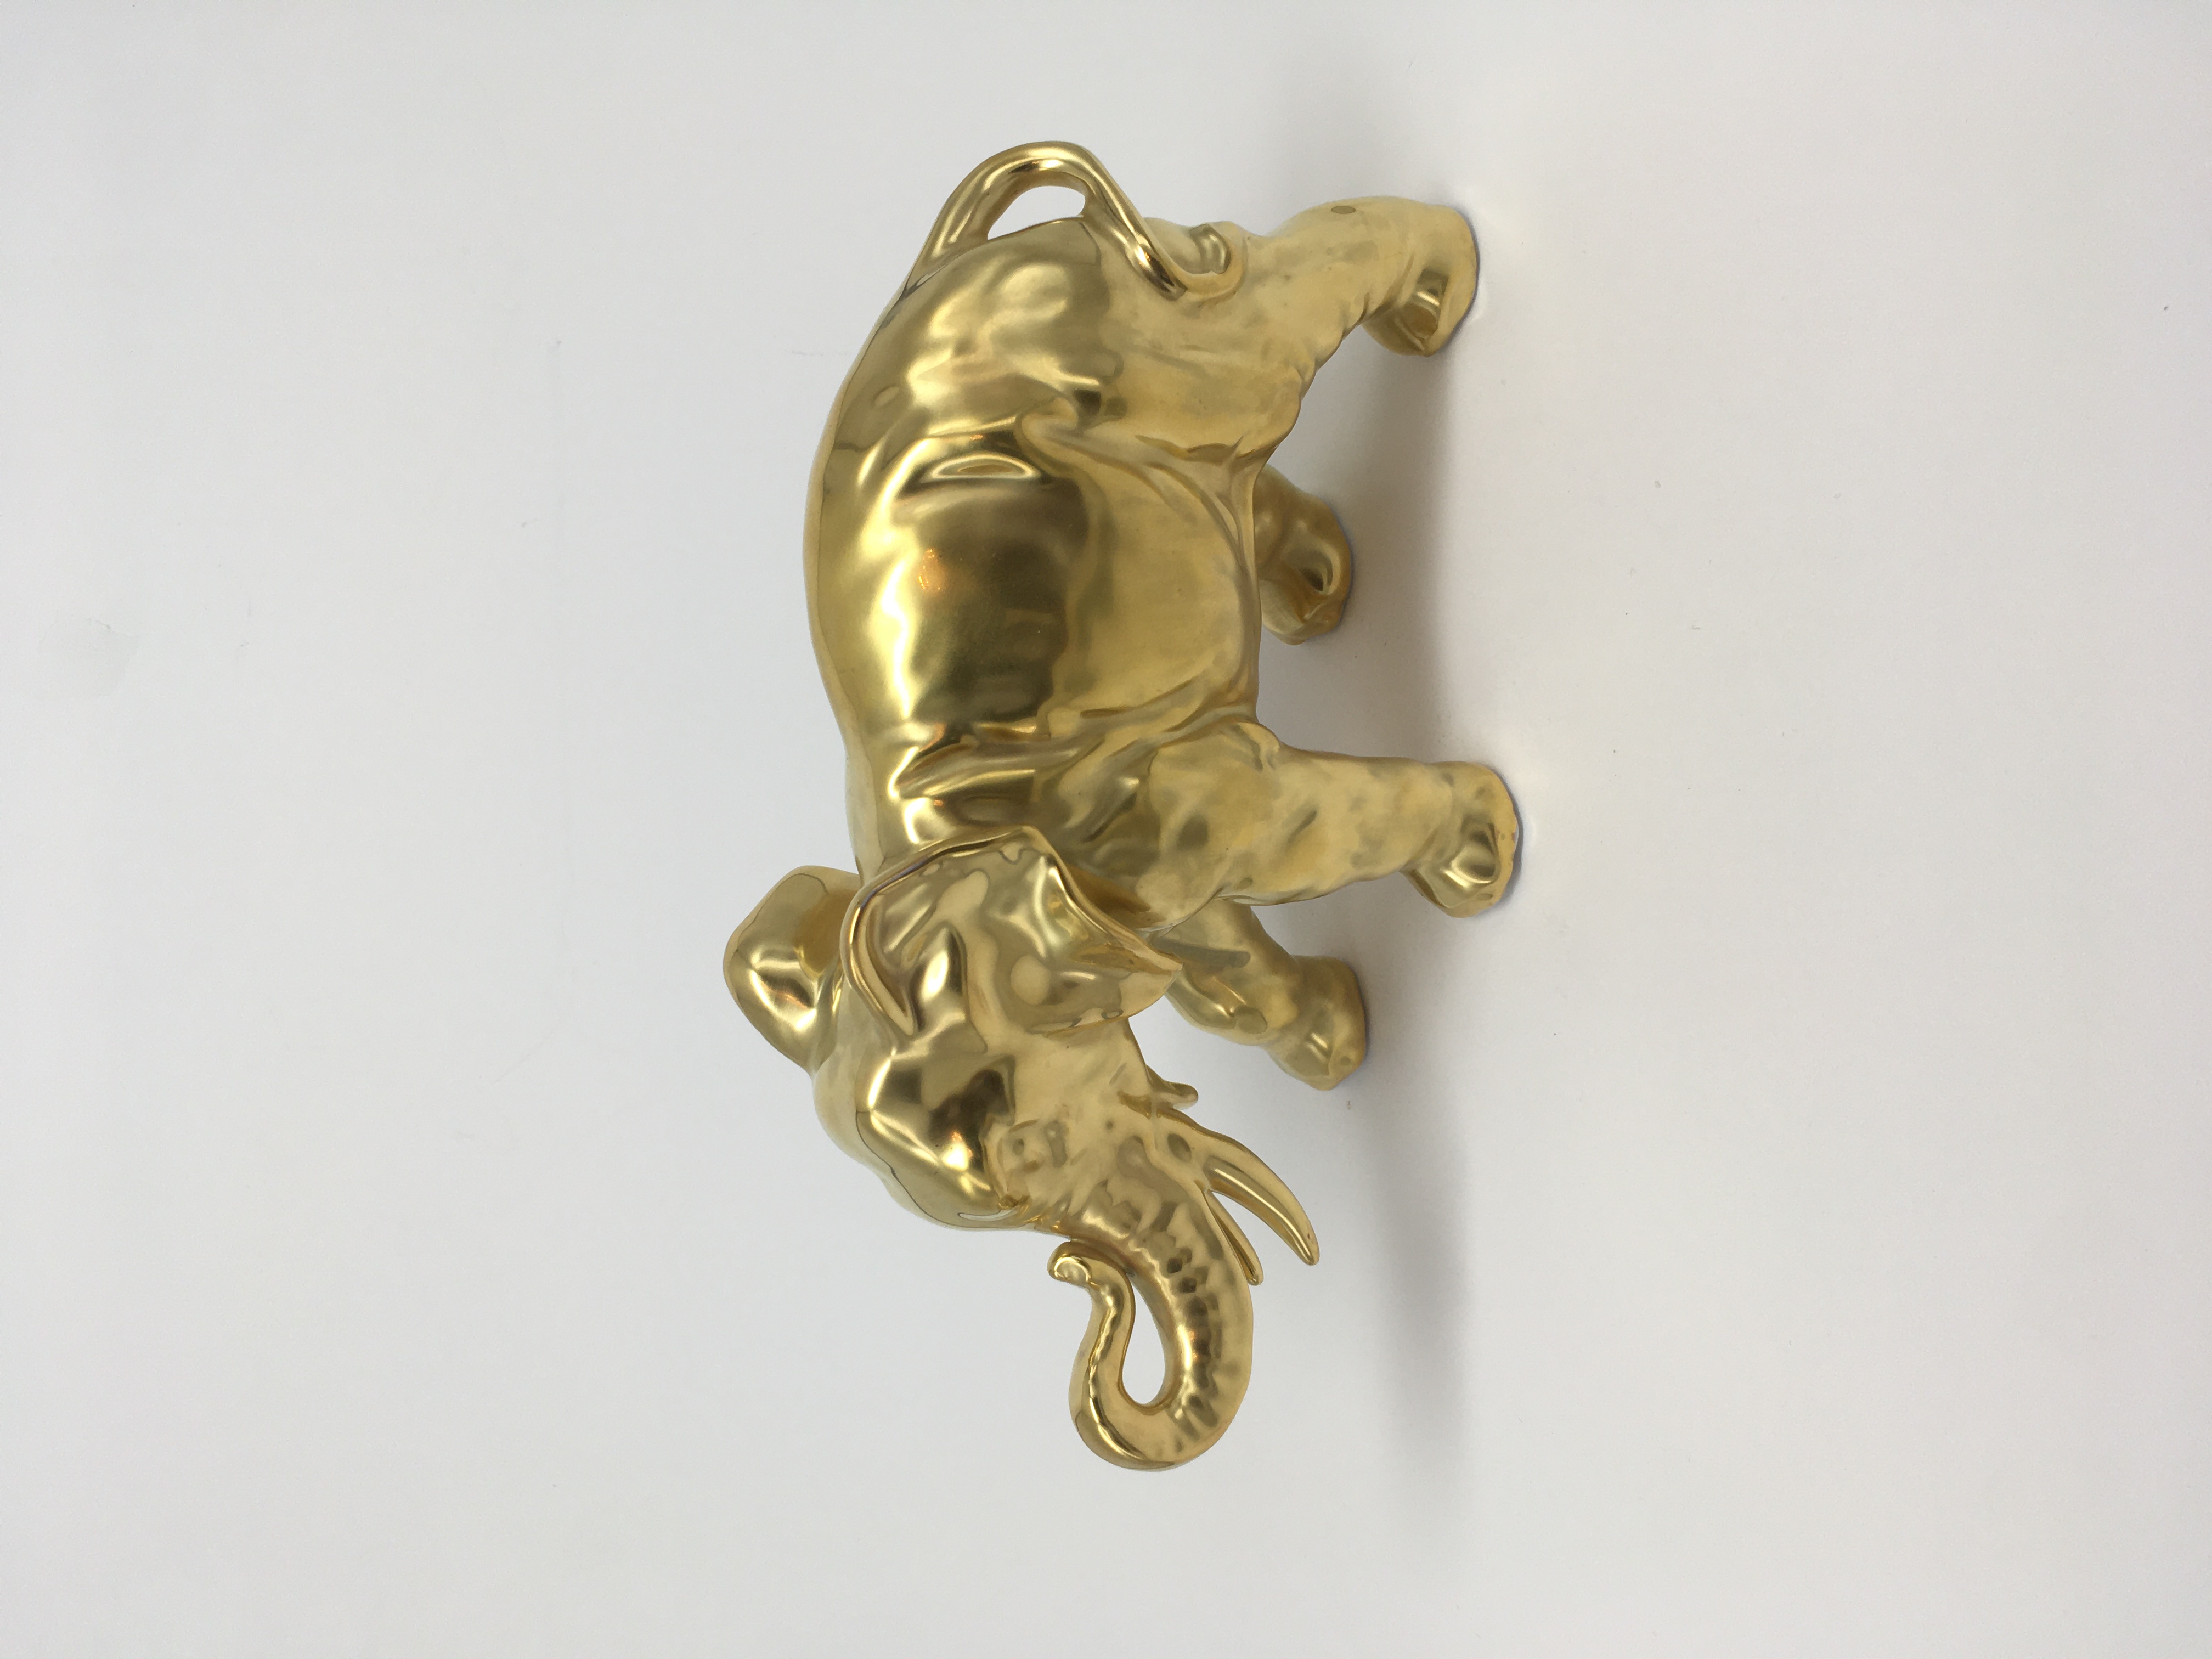 Porzellanmanufaktur Reichenbach Polished Golden Elephant by Gerd Sommerlade